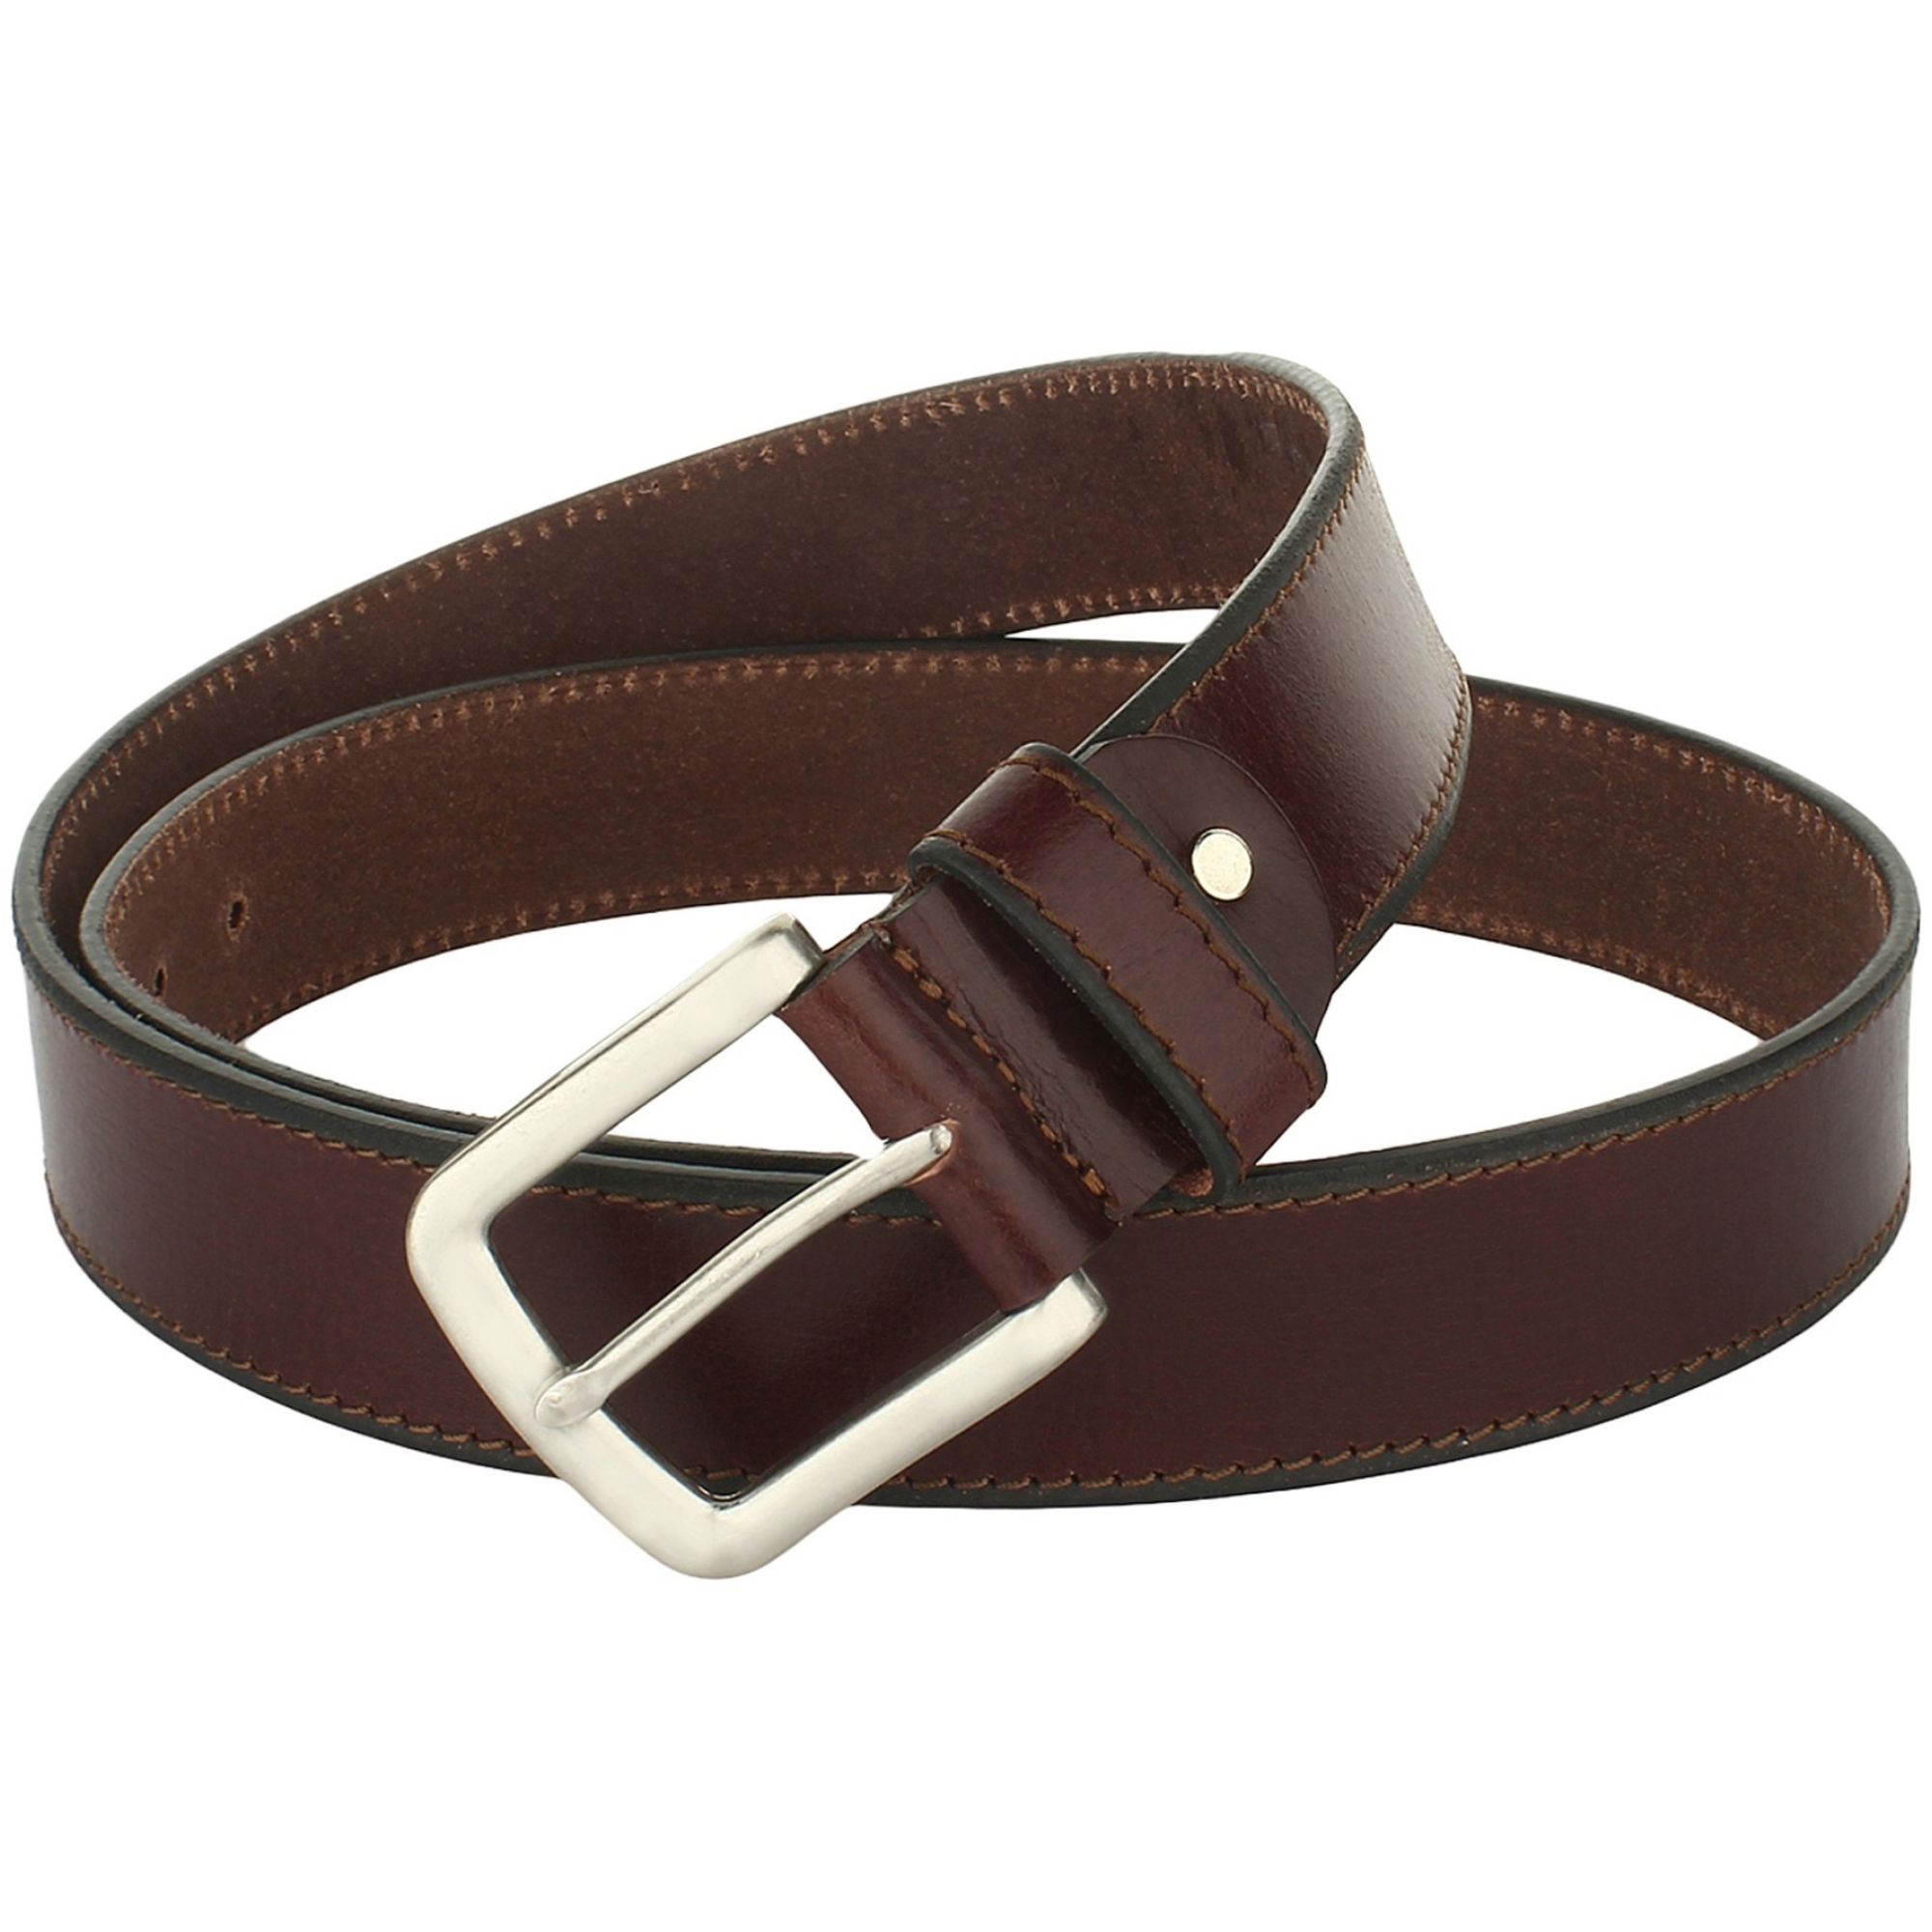 Debonair International Men's Casual Solid Genuine Leather Belt, DI934274, Brown